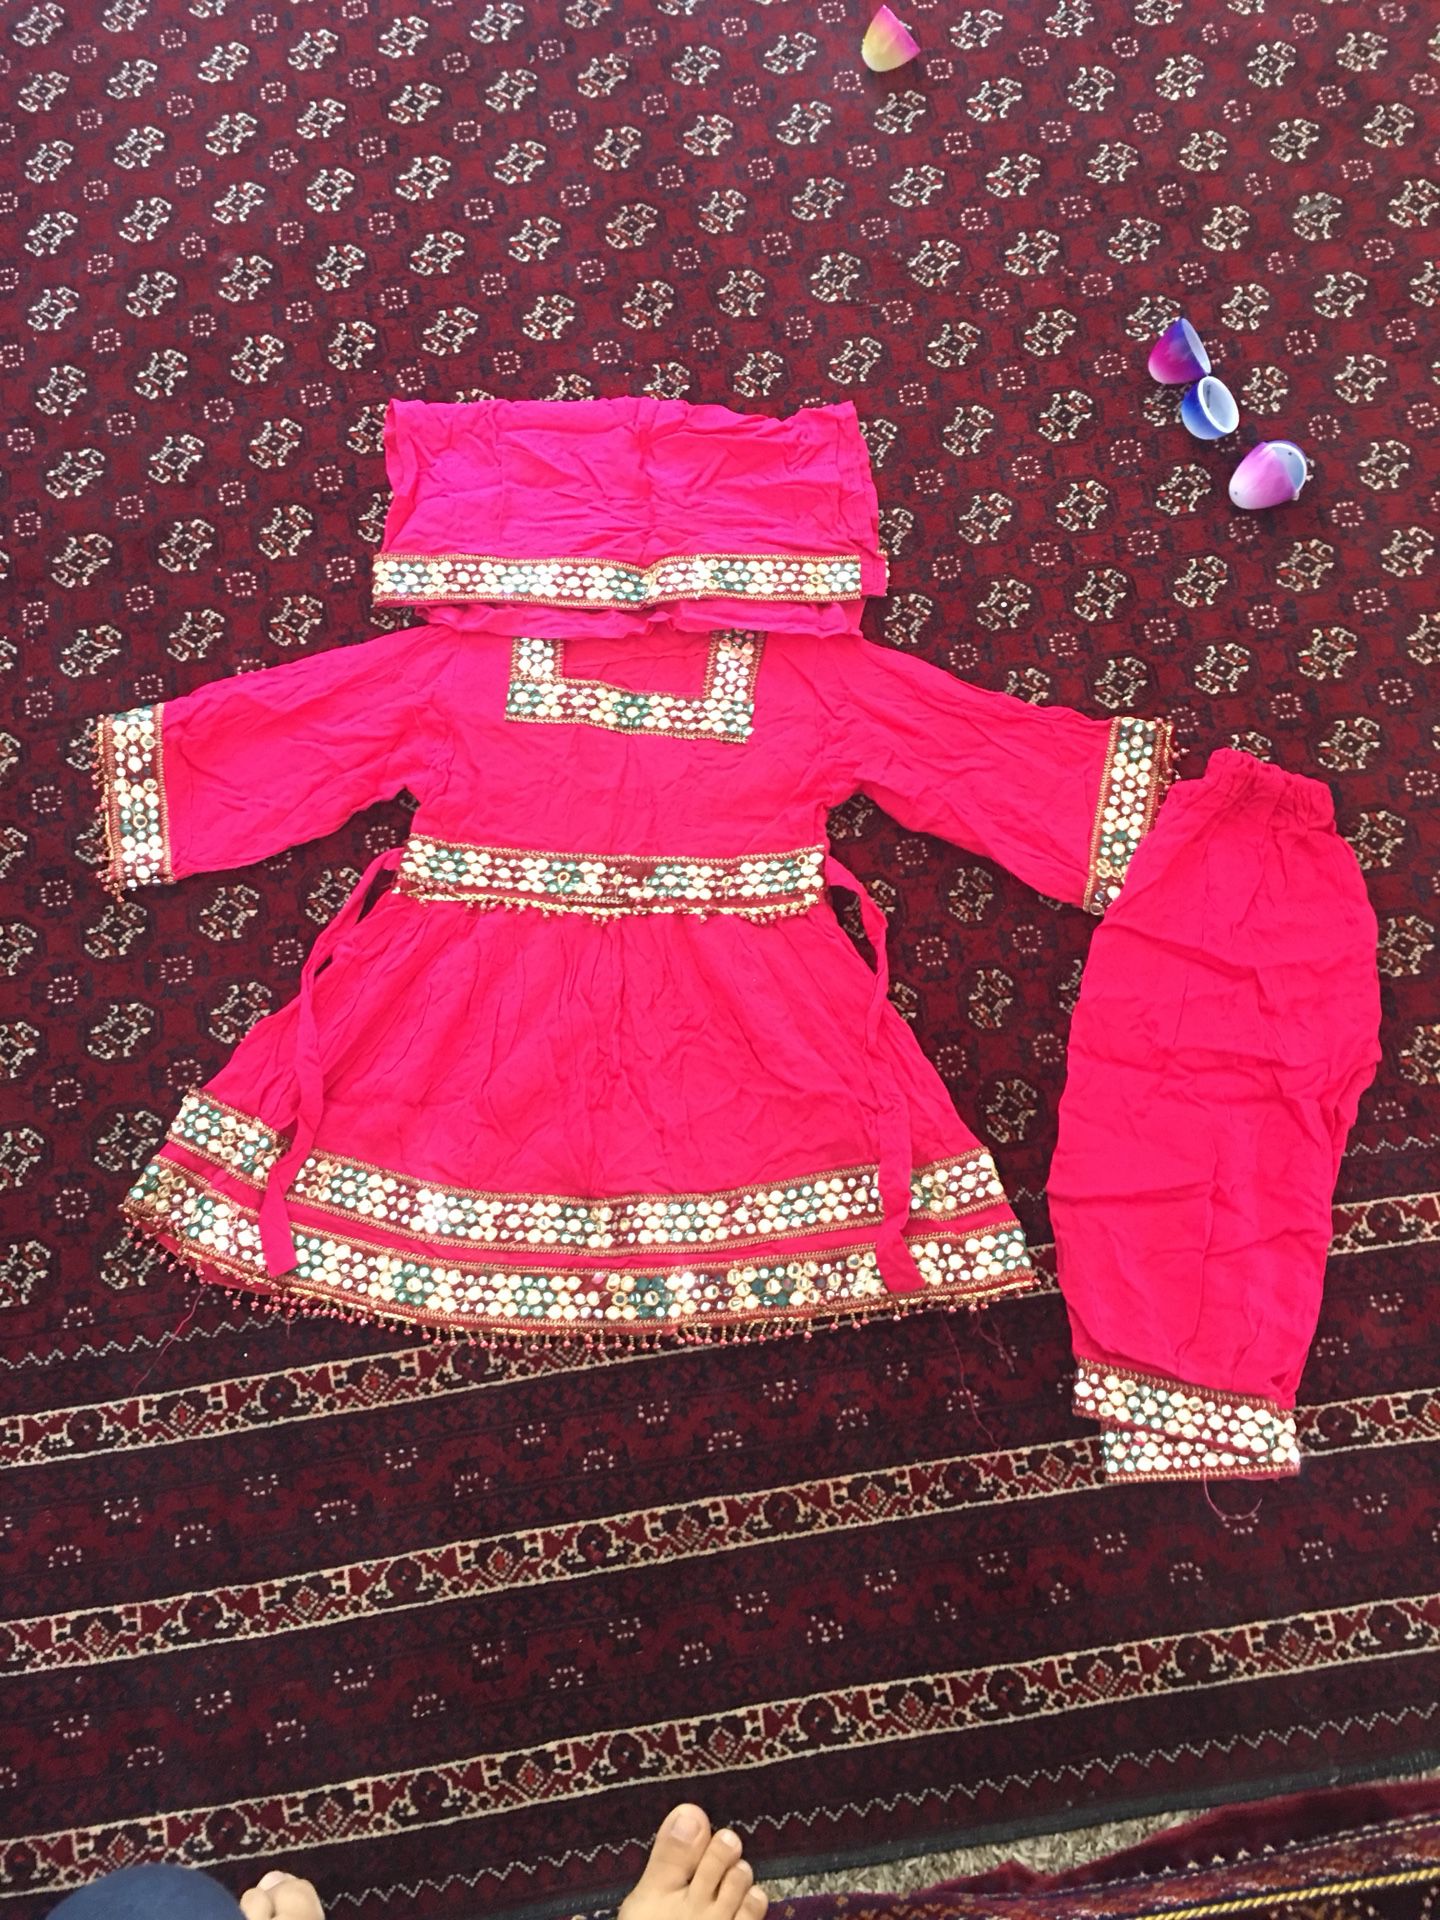 Afghani kids clothes